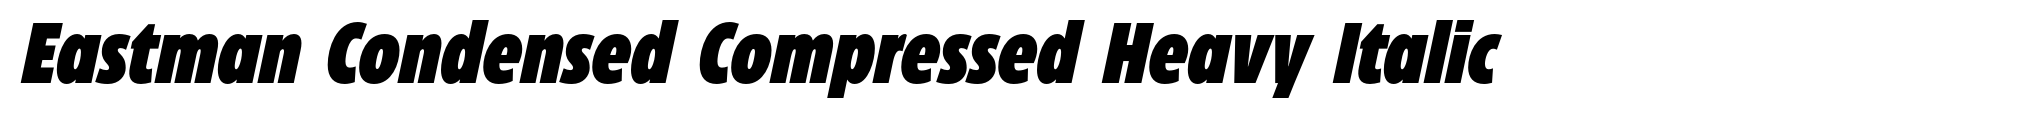 Eastman Condensed Compressed Heavy Italic image